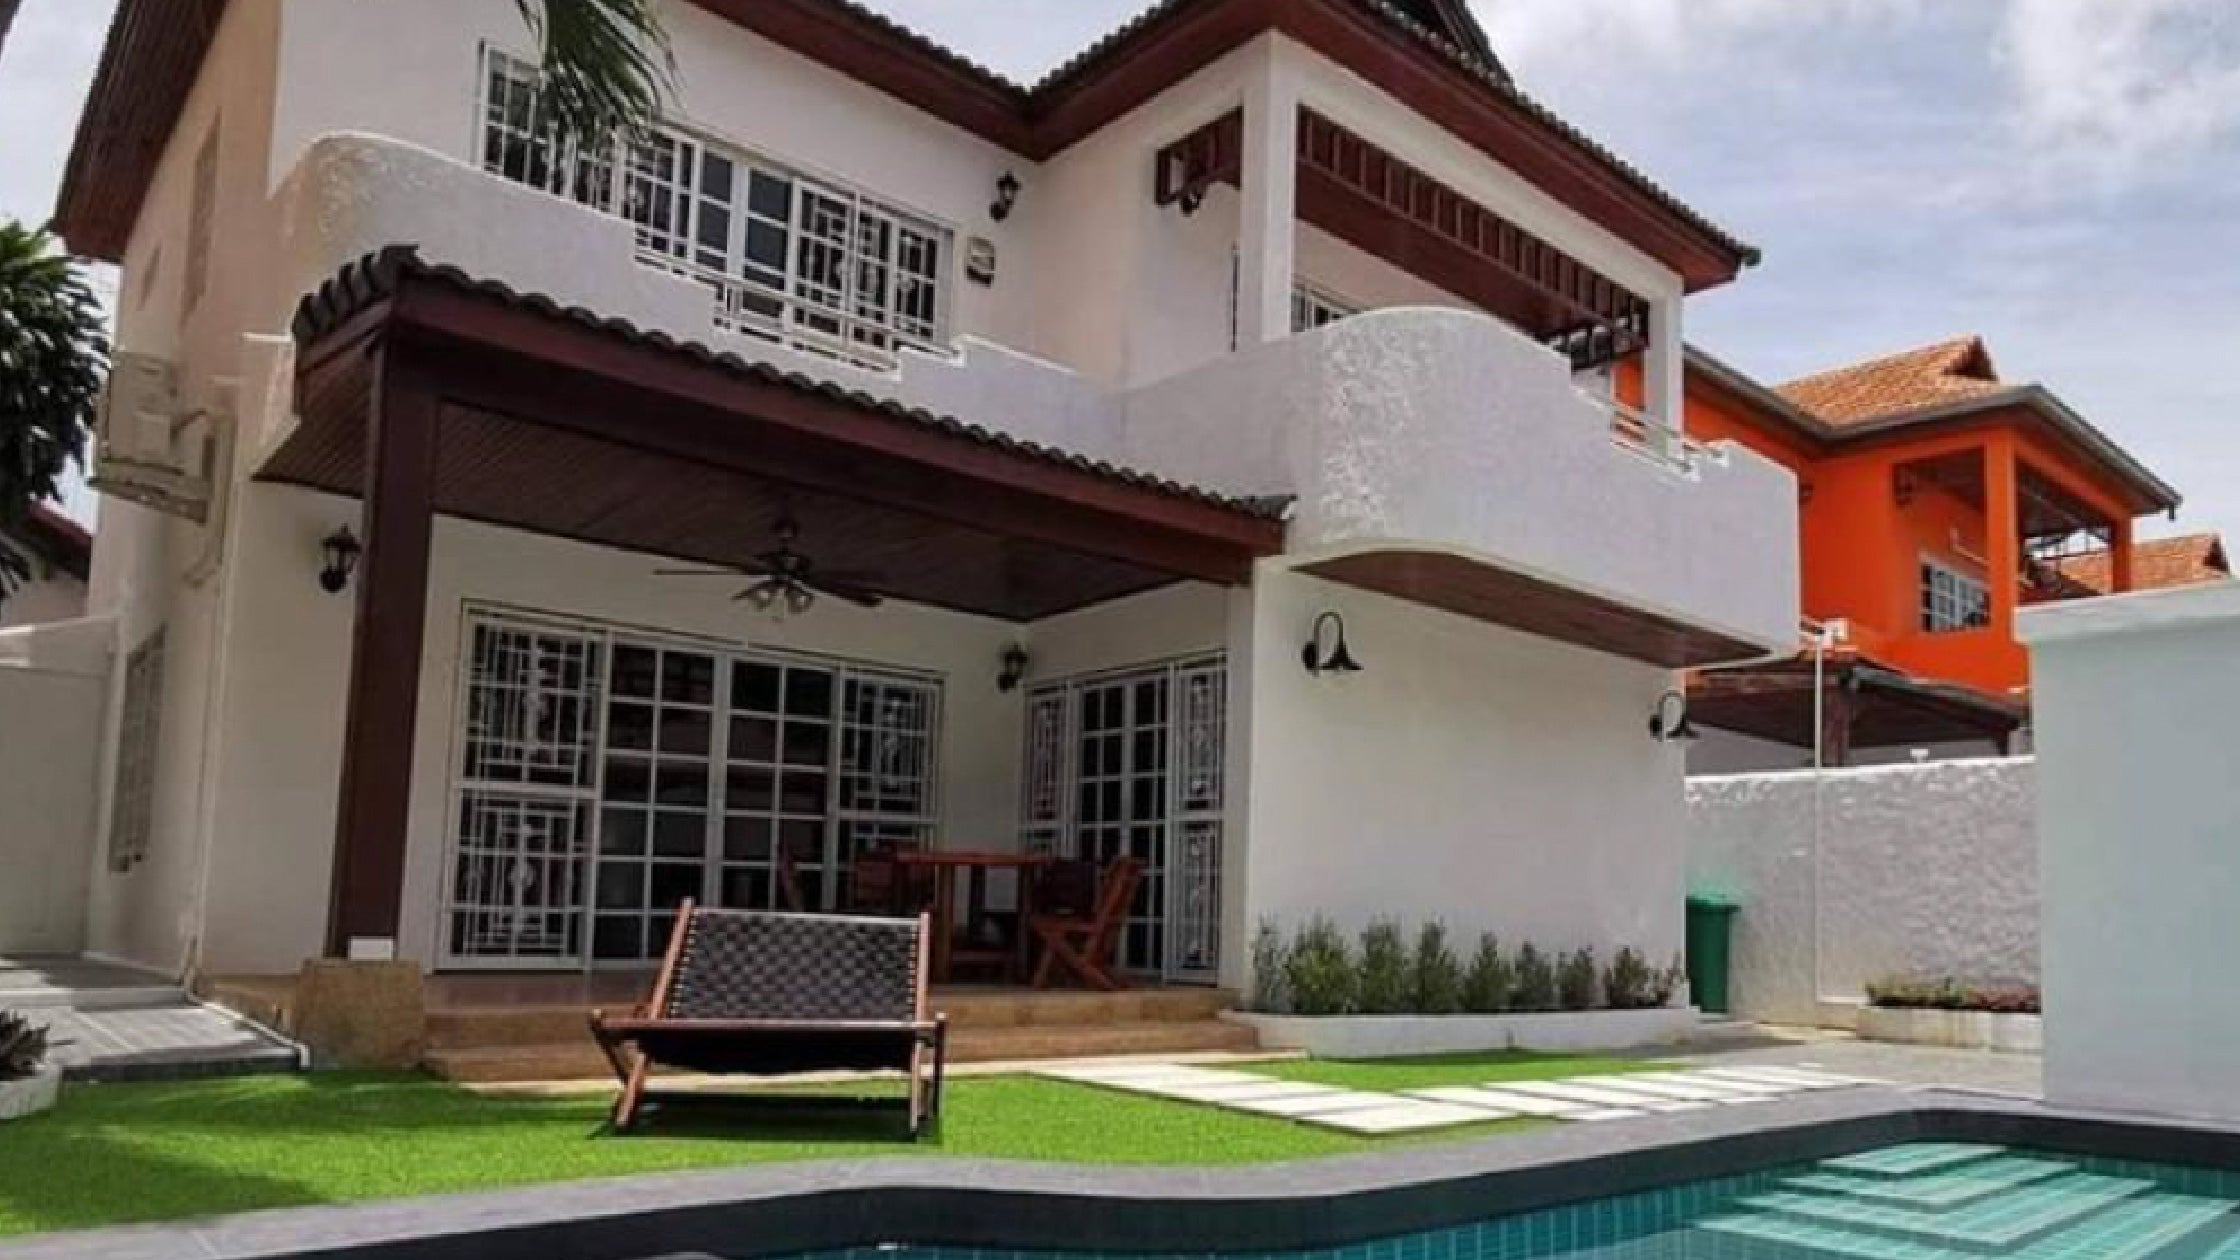 Kartar pool Villa Pattaya